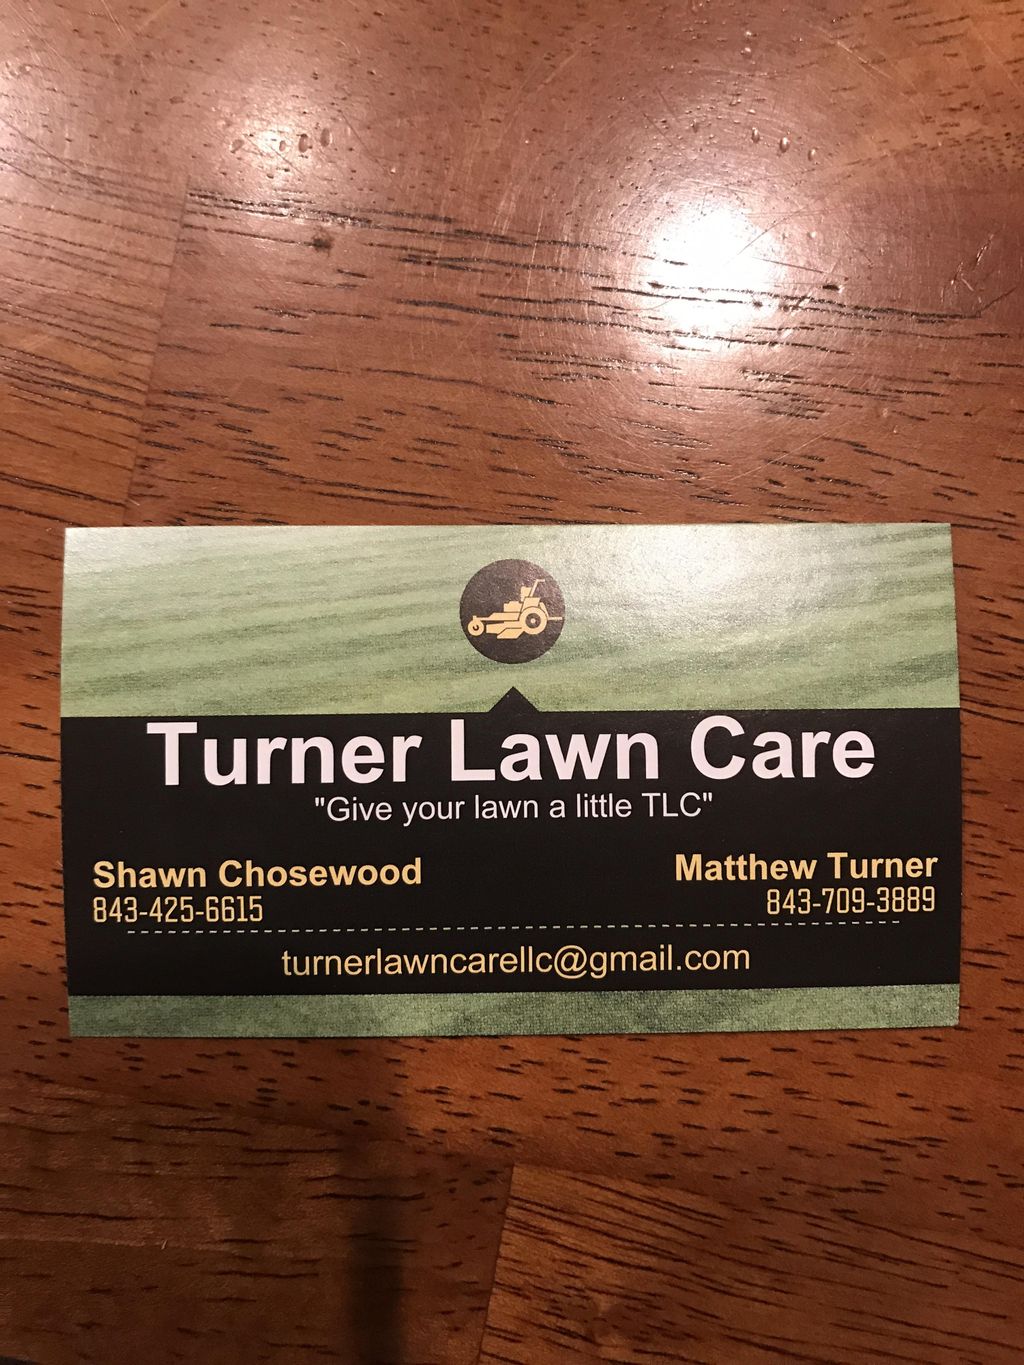 Turner Lawn Care